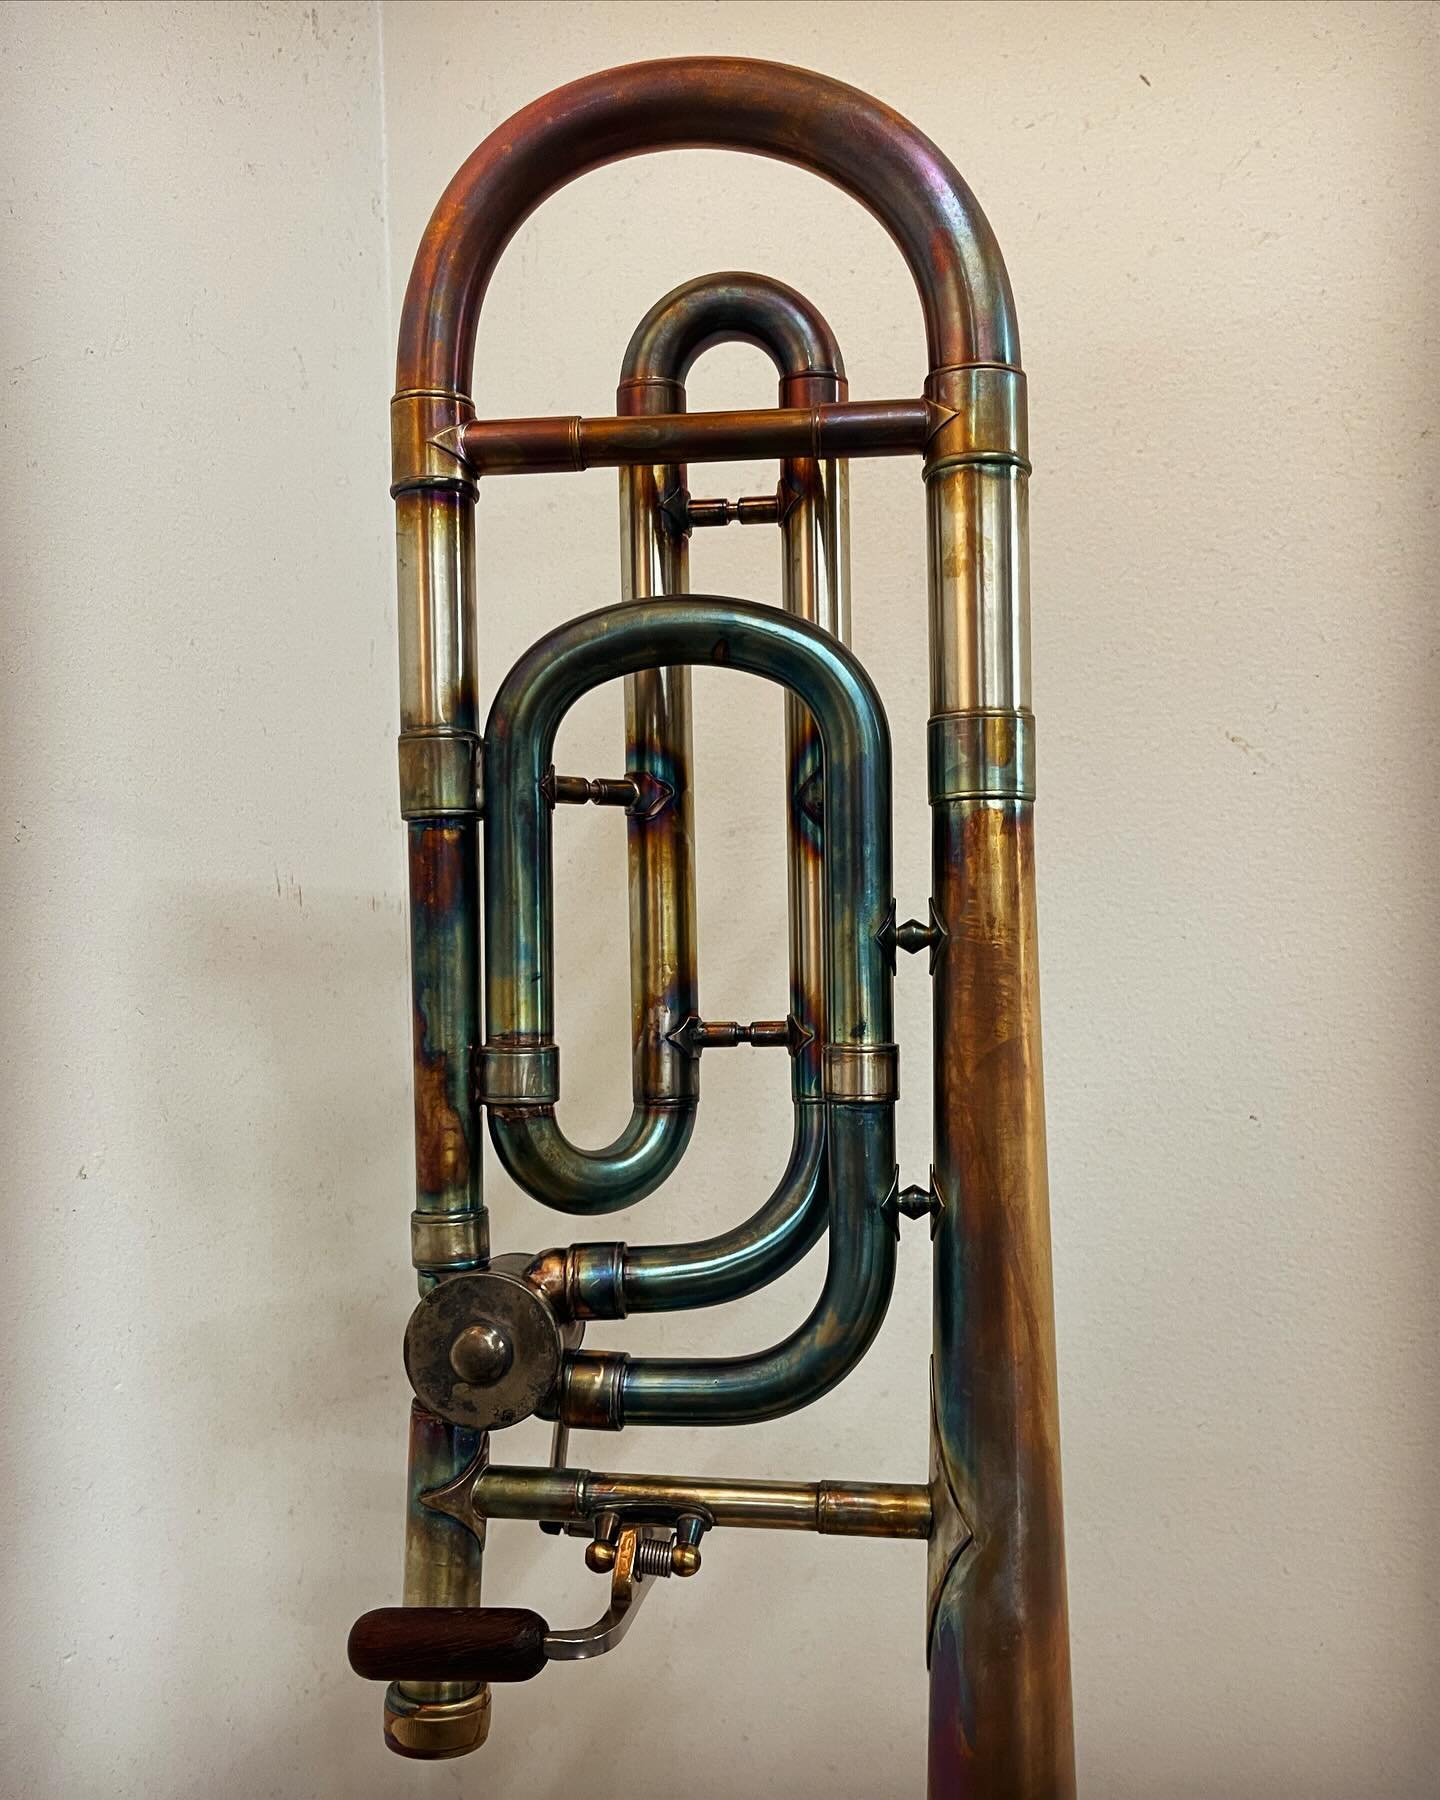 Part 2 - the matching trombone. @raymondjamesmason 

#SweeneyBrass
#keepitsimple 
#strip 
#quality
#shopcat
#custom
#patina
#trombone 
#basstrombone 
#doneright 
#modification
#rebuild
#custom
#refurbish
#flugabone
#tuba
#trombone
#euphonium
#tarnish